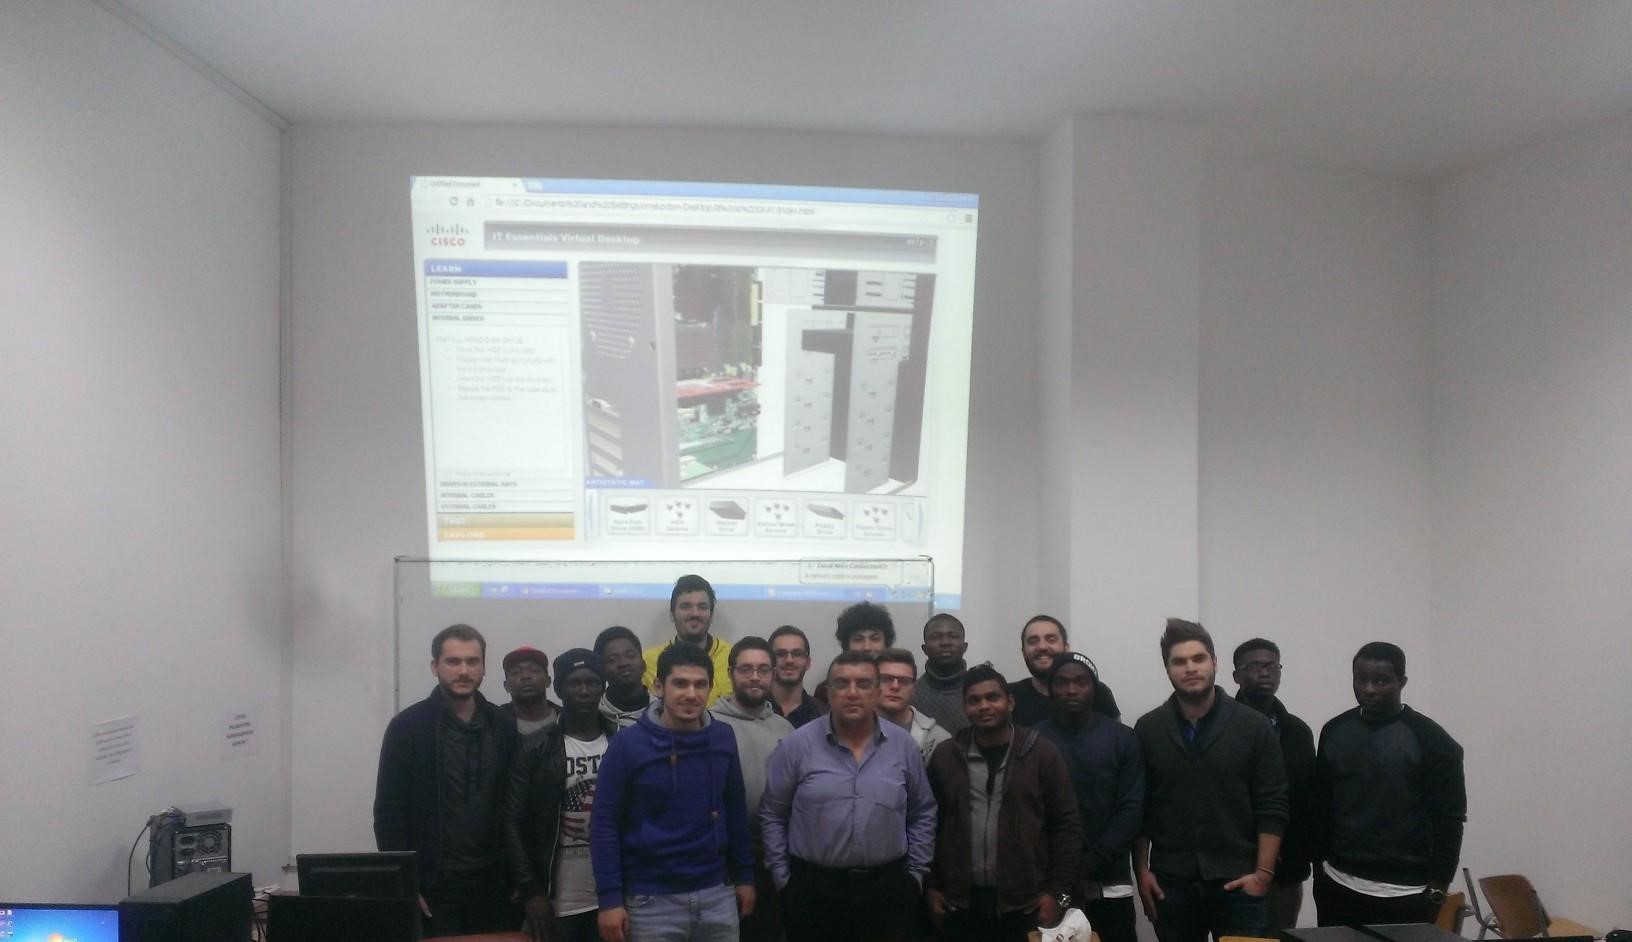 Cisco IT Essentials Virtual Desktop PC & Laptop” active training ‘workshop’ was held by Computer Engineering Department